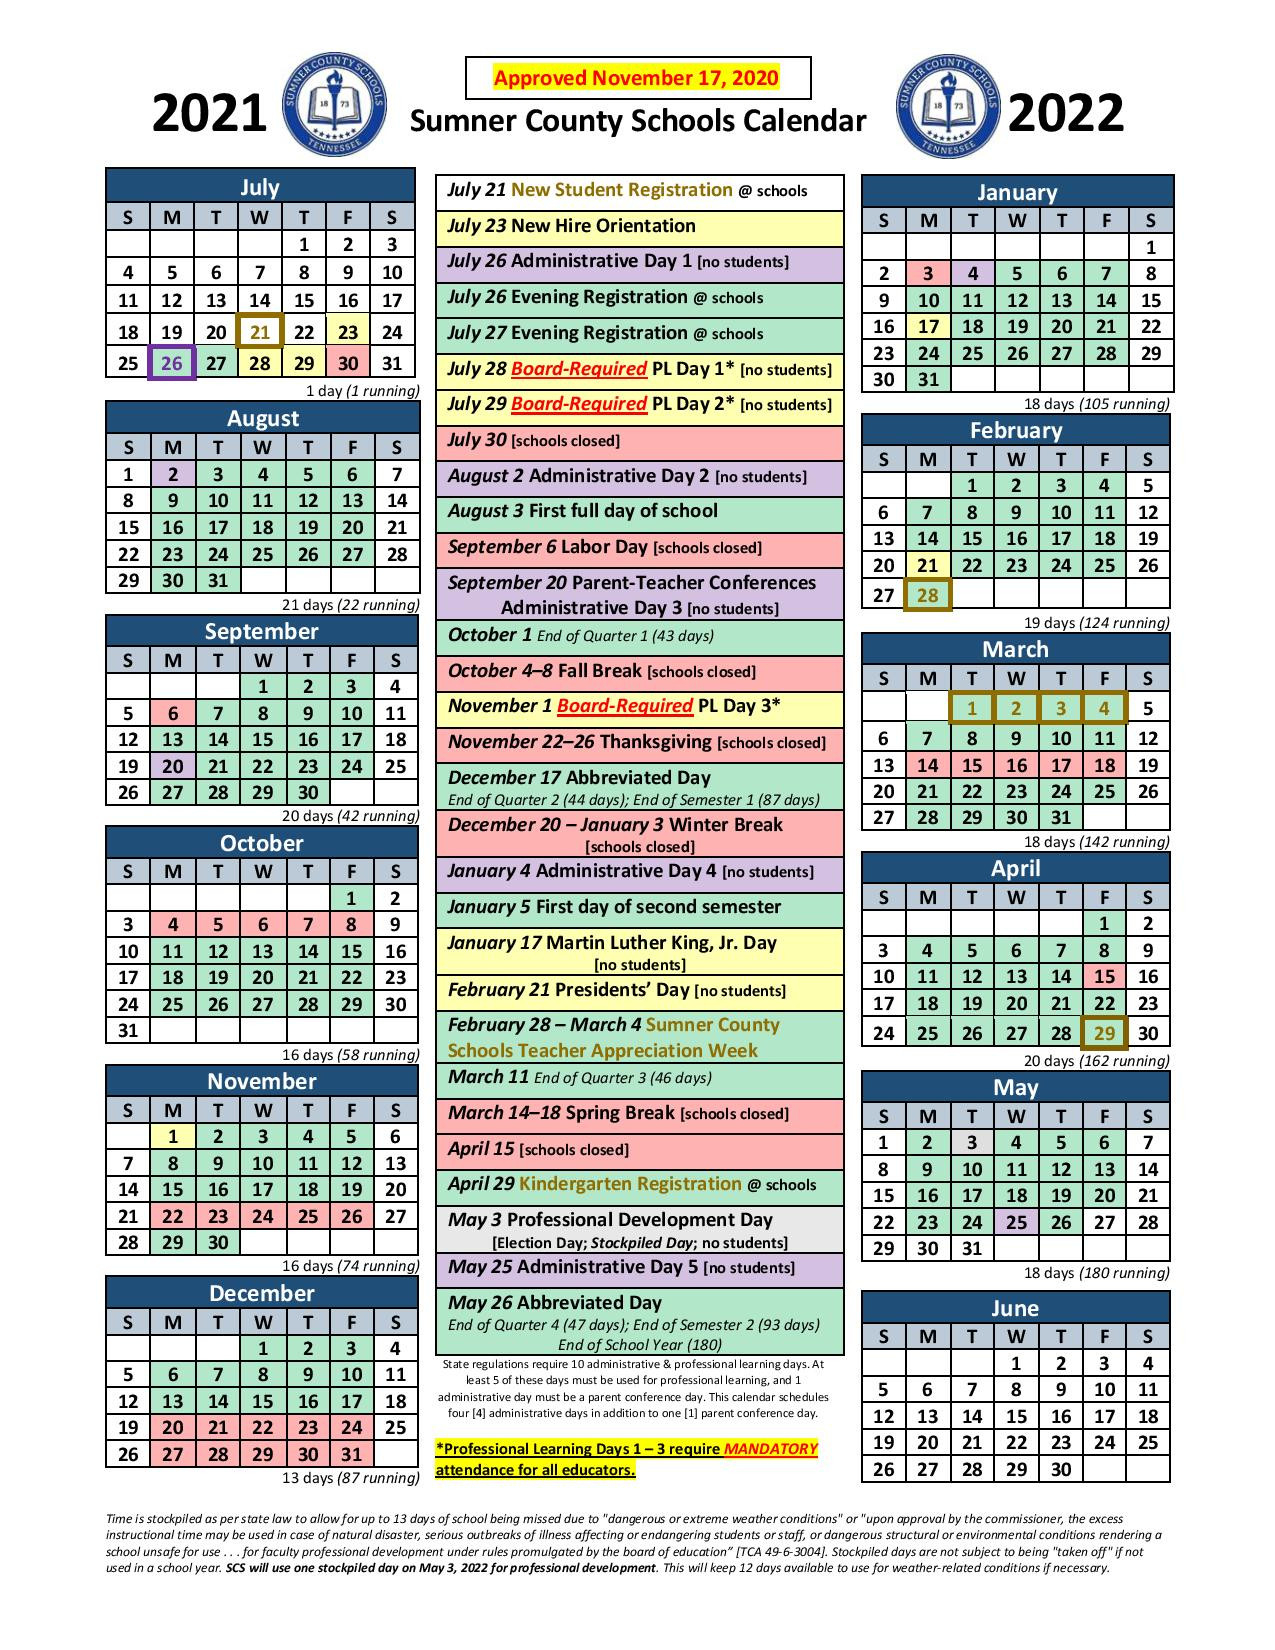 Sumner County School Calendar Holidays 2021-2022-Next Year School Calendar 2022